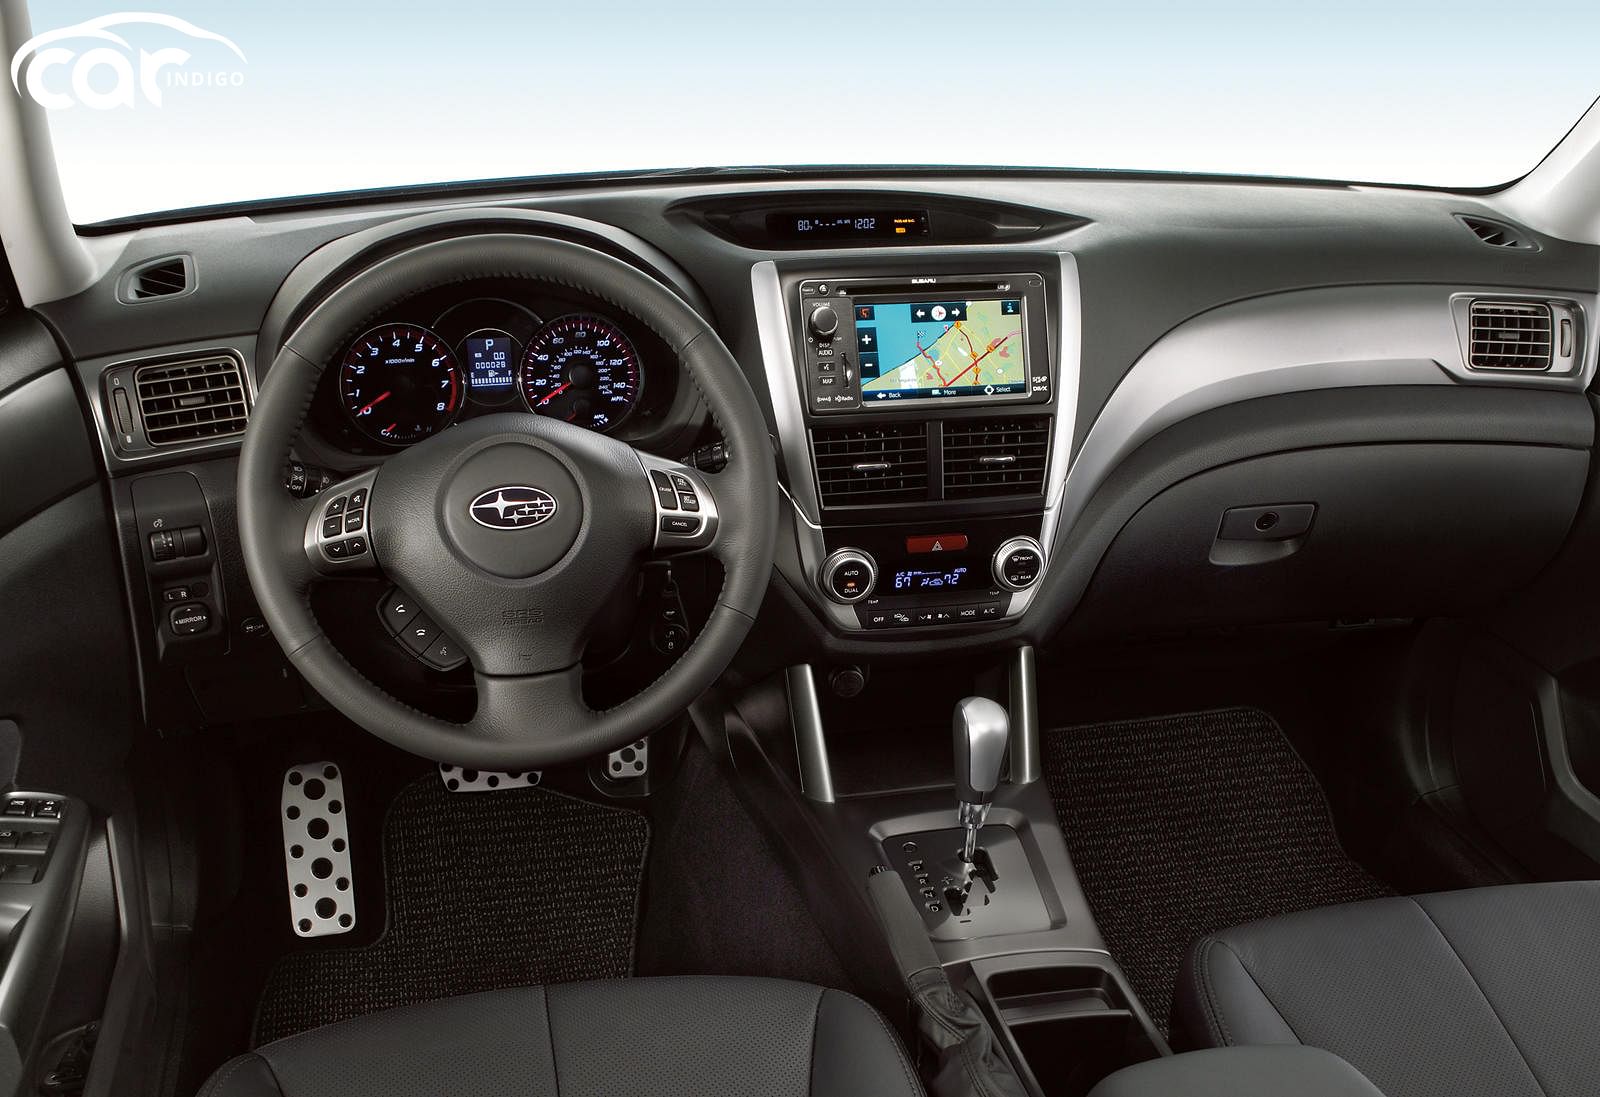 2013 Subaru Forester Interior Review - Seating, Infotainment, Dashboard and  Features | CarIndigo.com